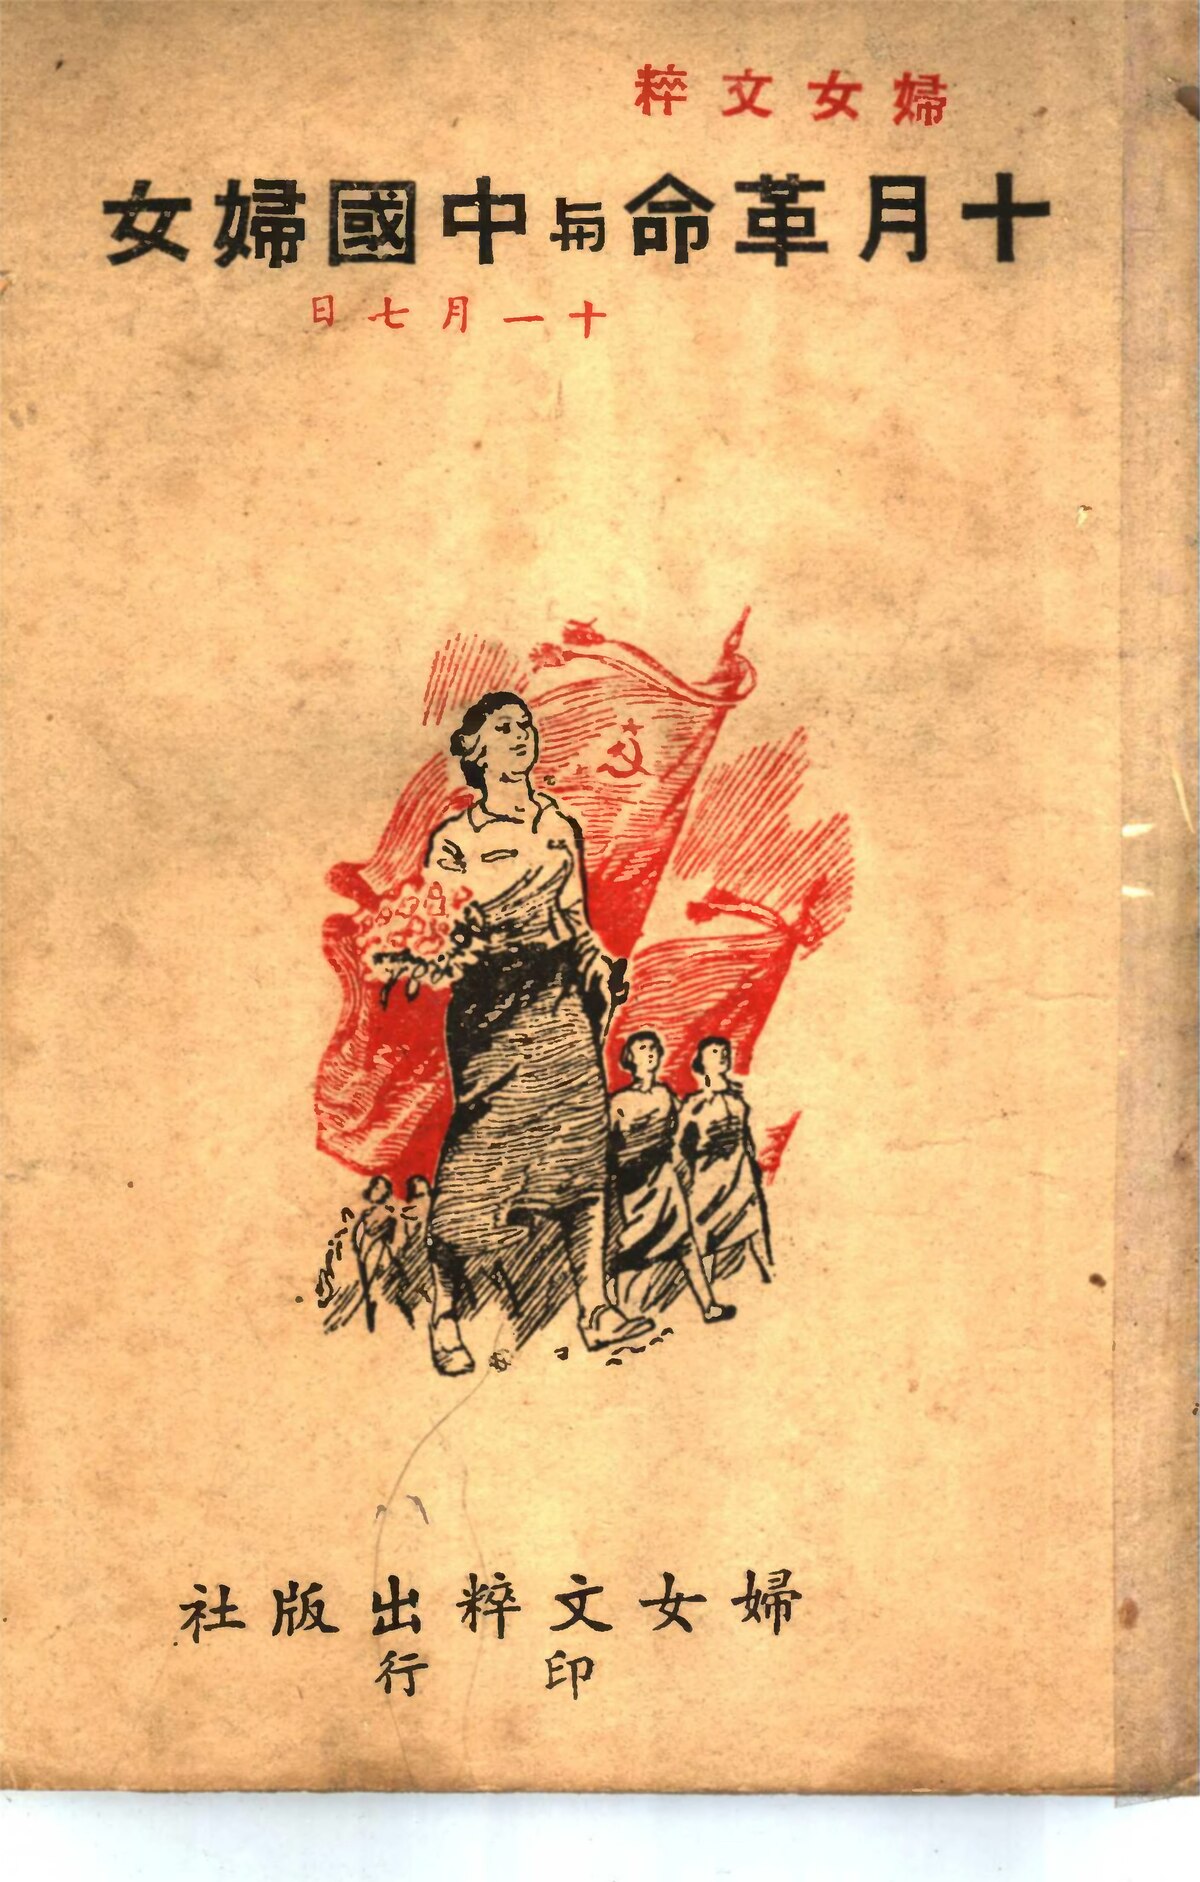 File:CADAL07002284 十月革命與中國婦女.djvu - Wikimedia Commons